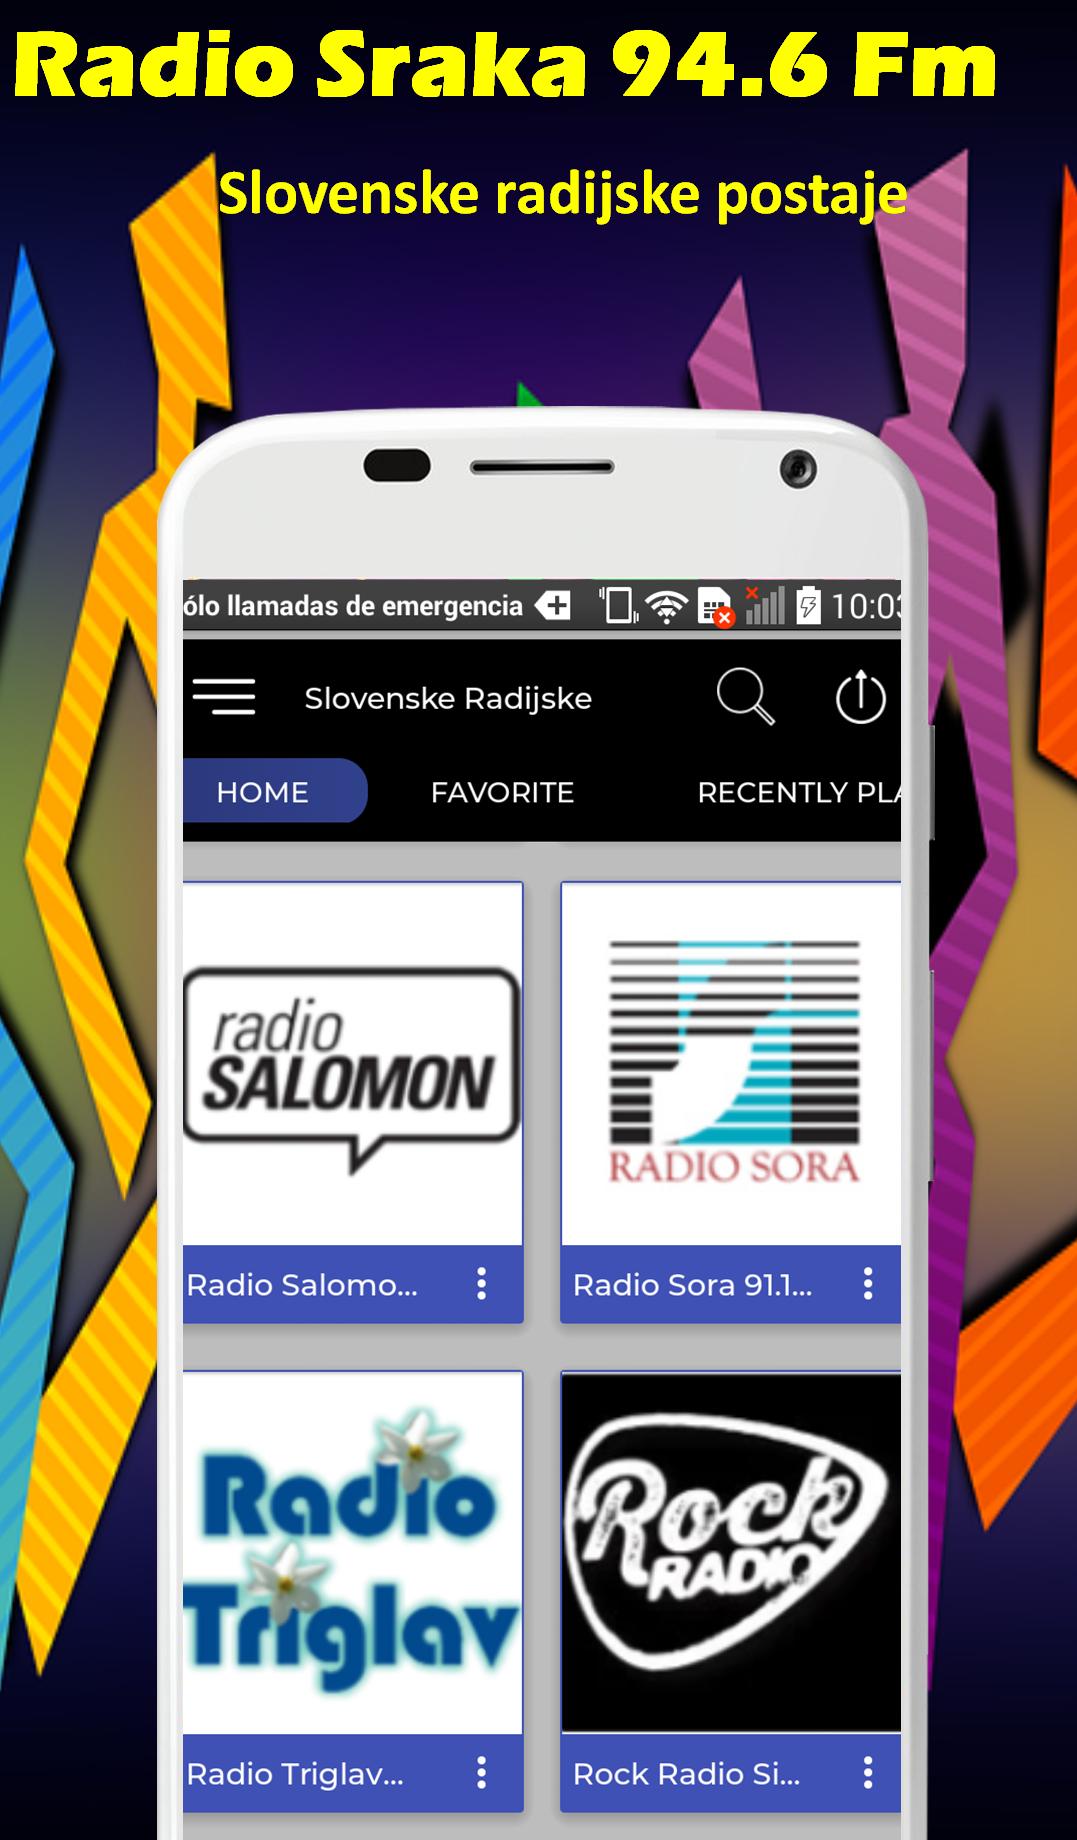 Radio Sraka 94.6 Fm for Android - APK Download